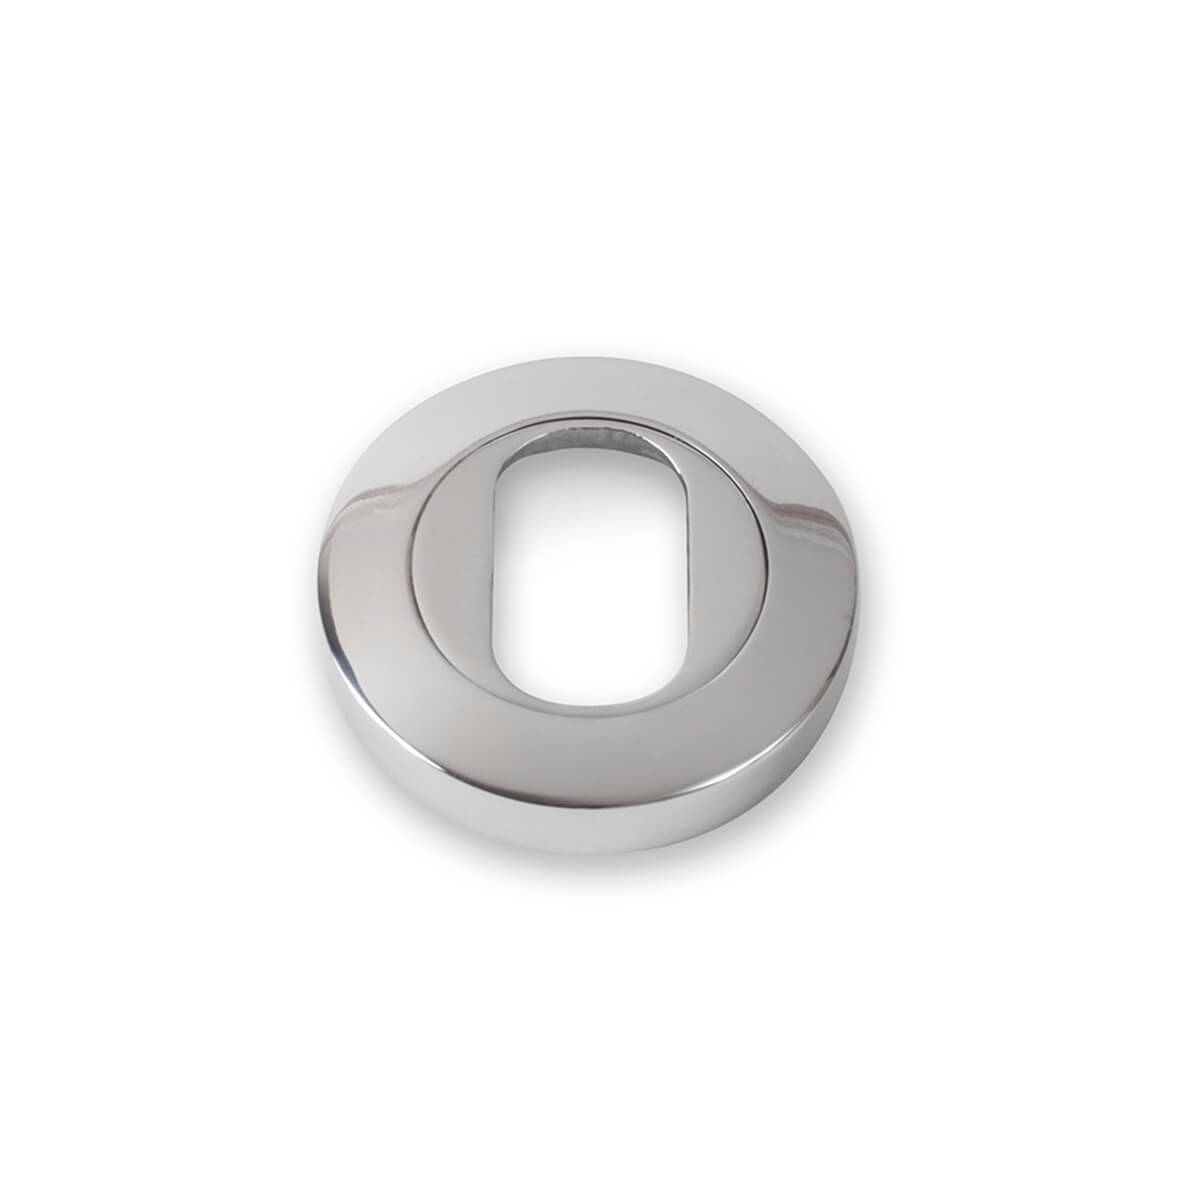 53mm Round Oval Escutcheon - Chrome Plate